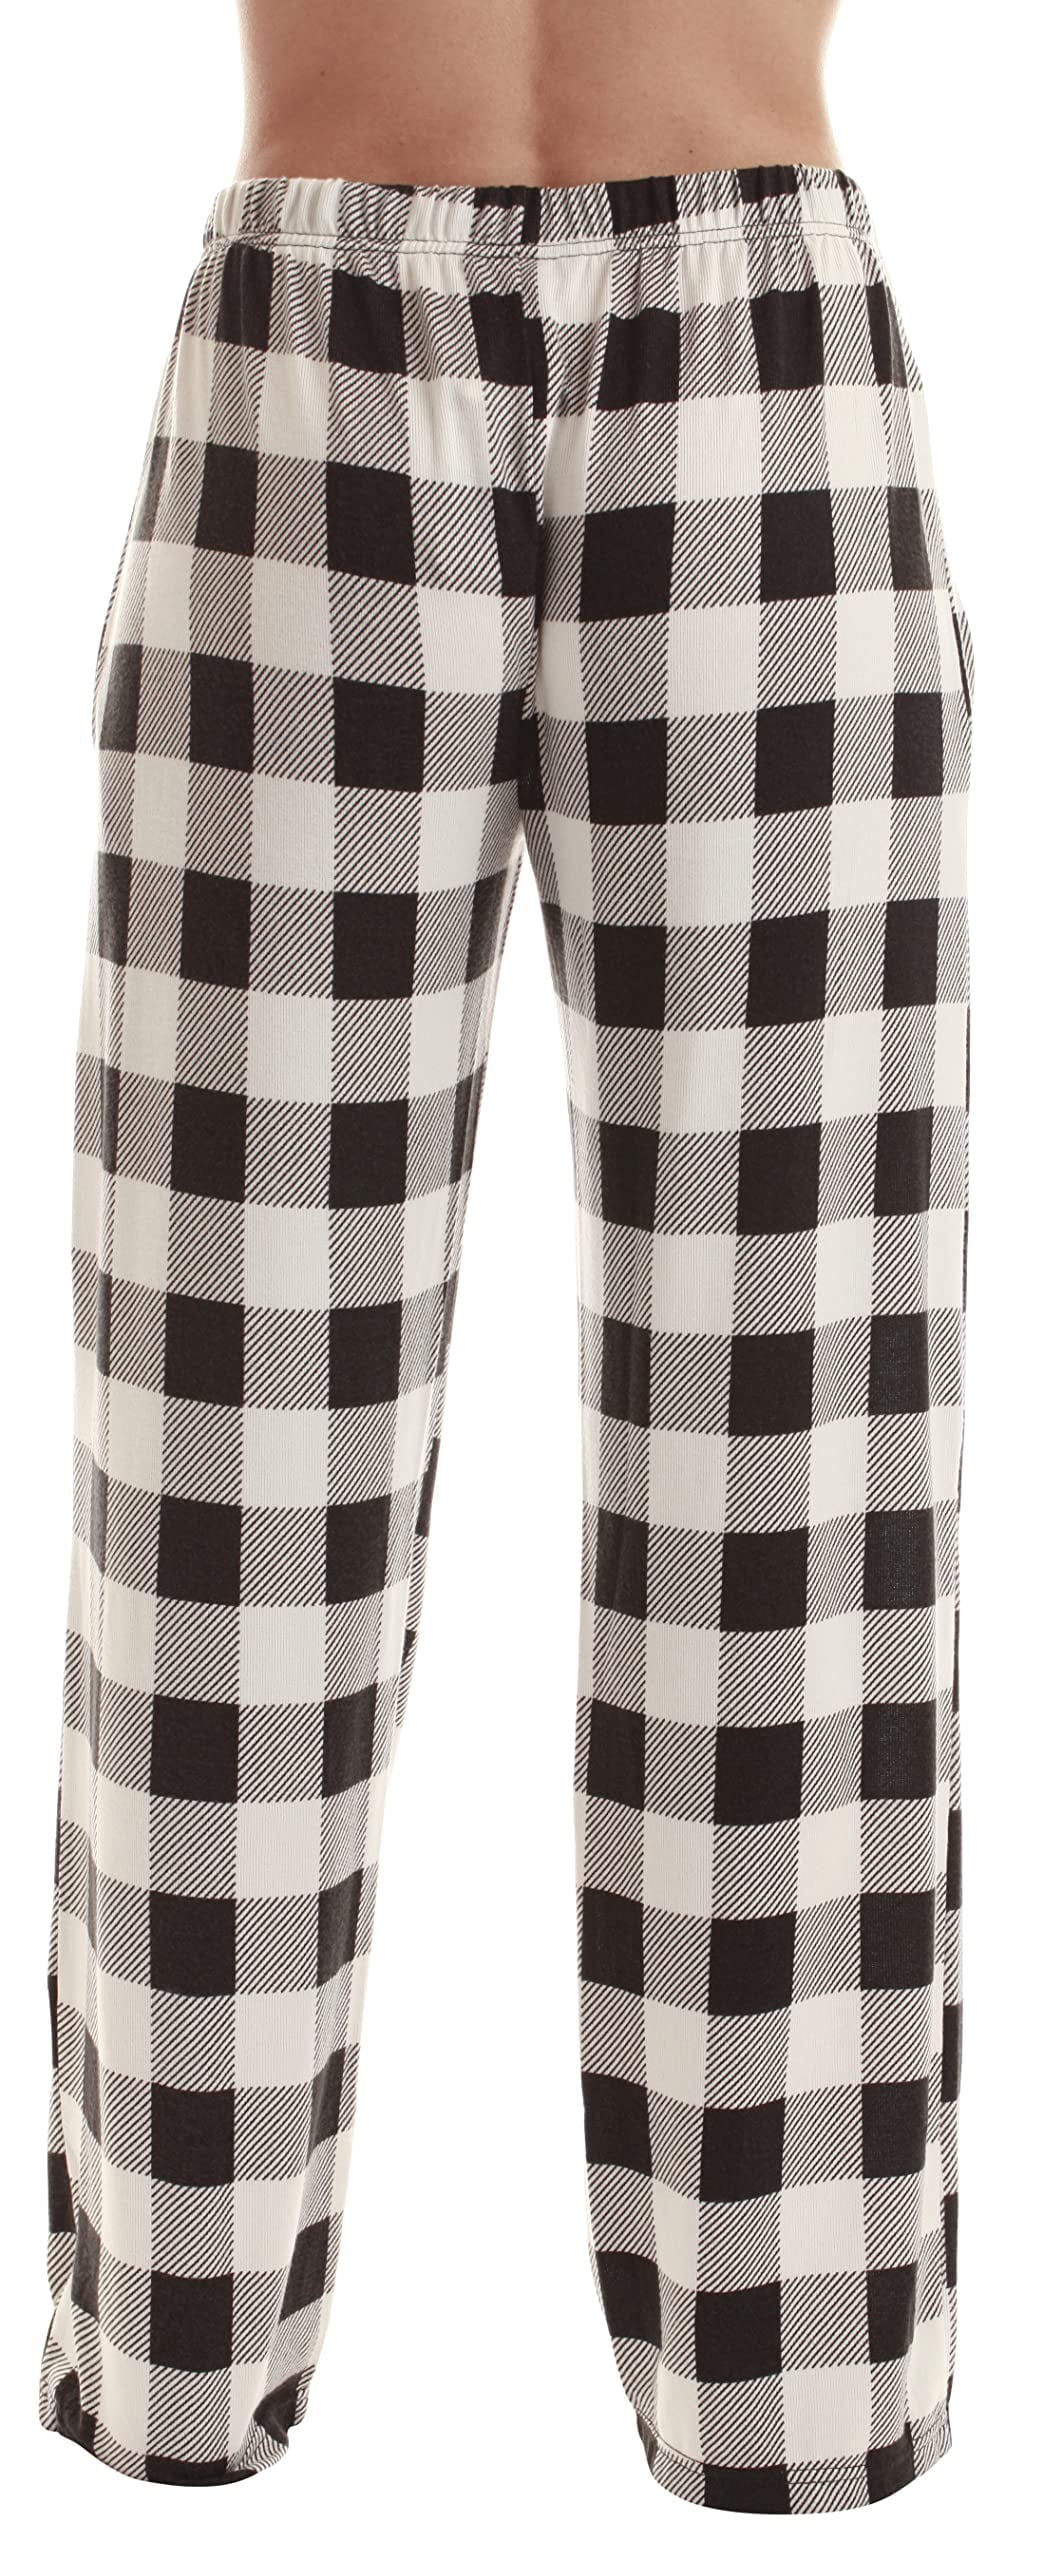 Just Love Fleece Pajama Pants for Women Sleepwear PJs (White Black Buffalo  Plaid - Hacci Fabric, Medium) 